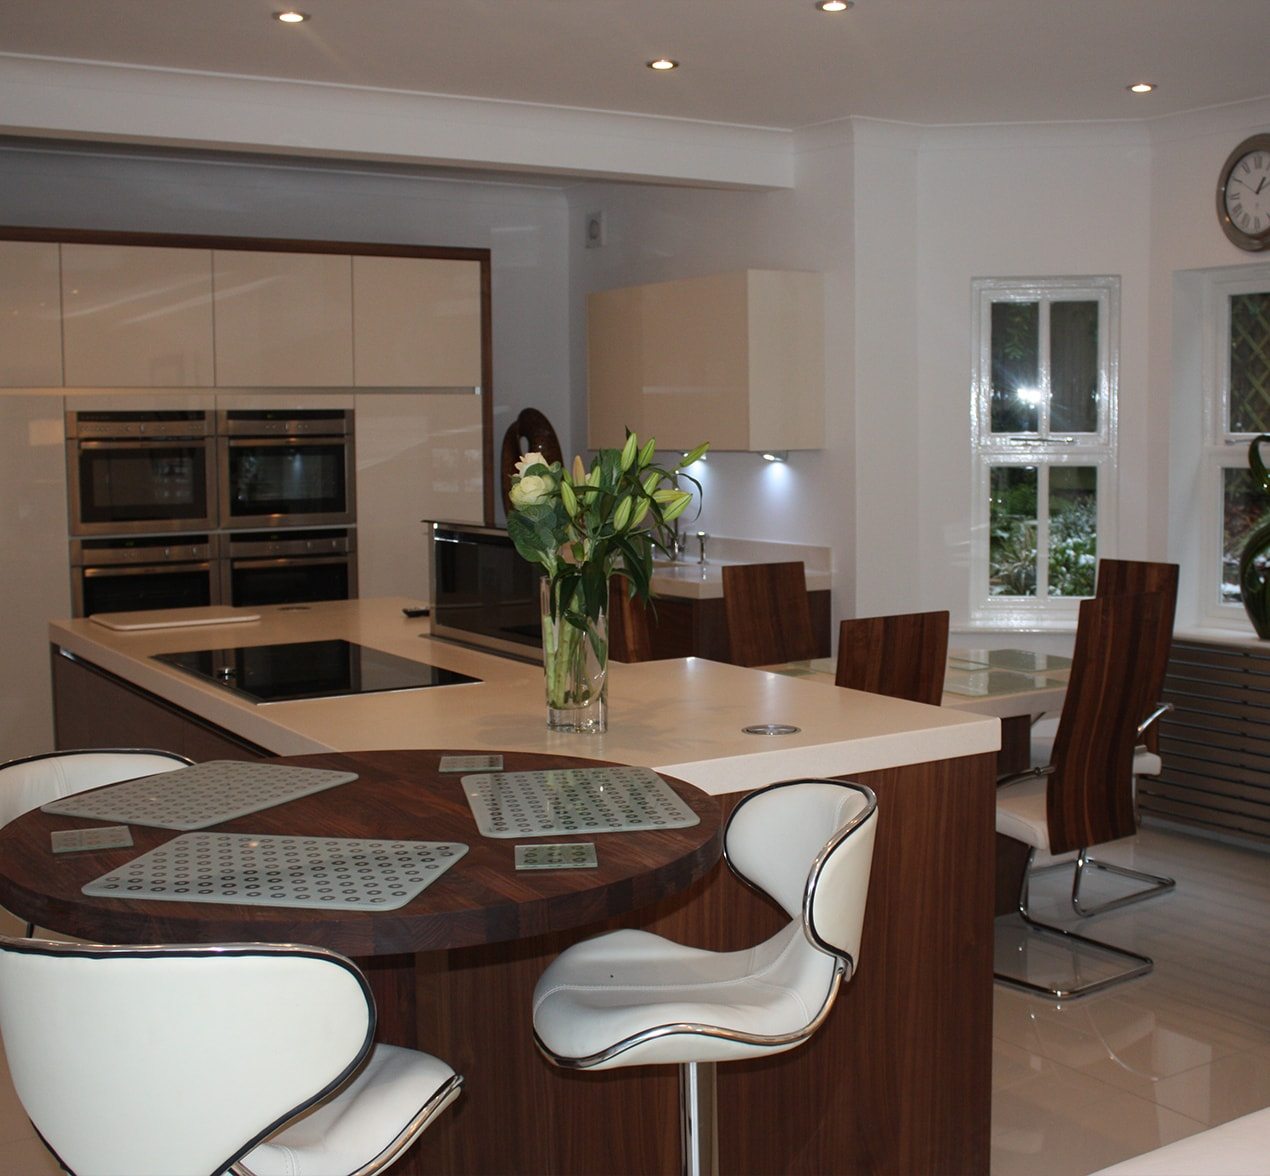 Big, bright and beautiful kitchen design in Bowdon